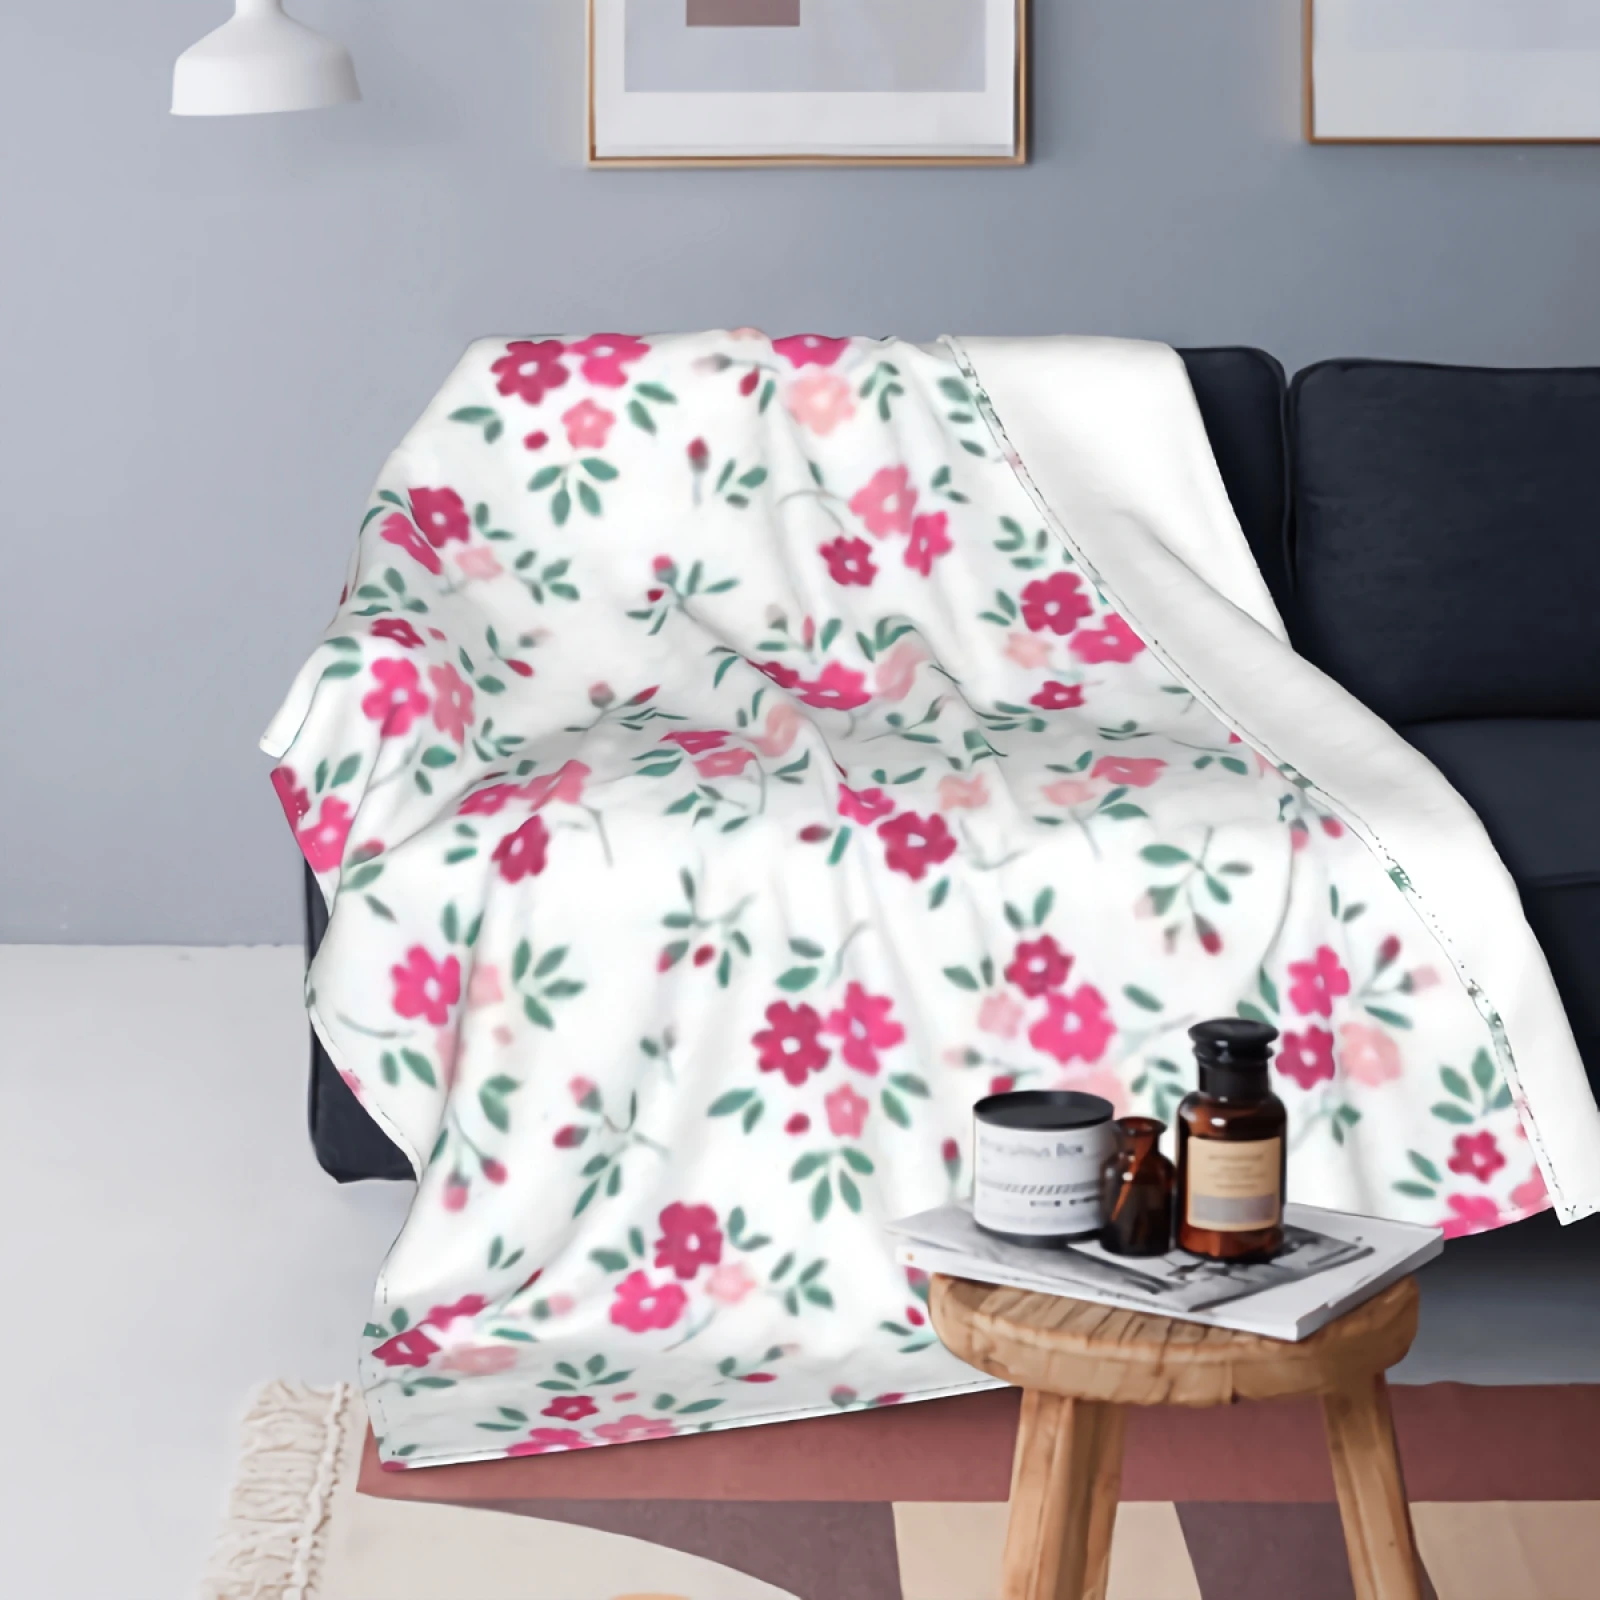 

Daisy Floral Background Throw Blanket 60"x50" Micro Fleece Blanket For Bed Sofa All Season Decor